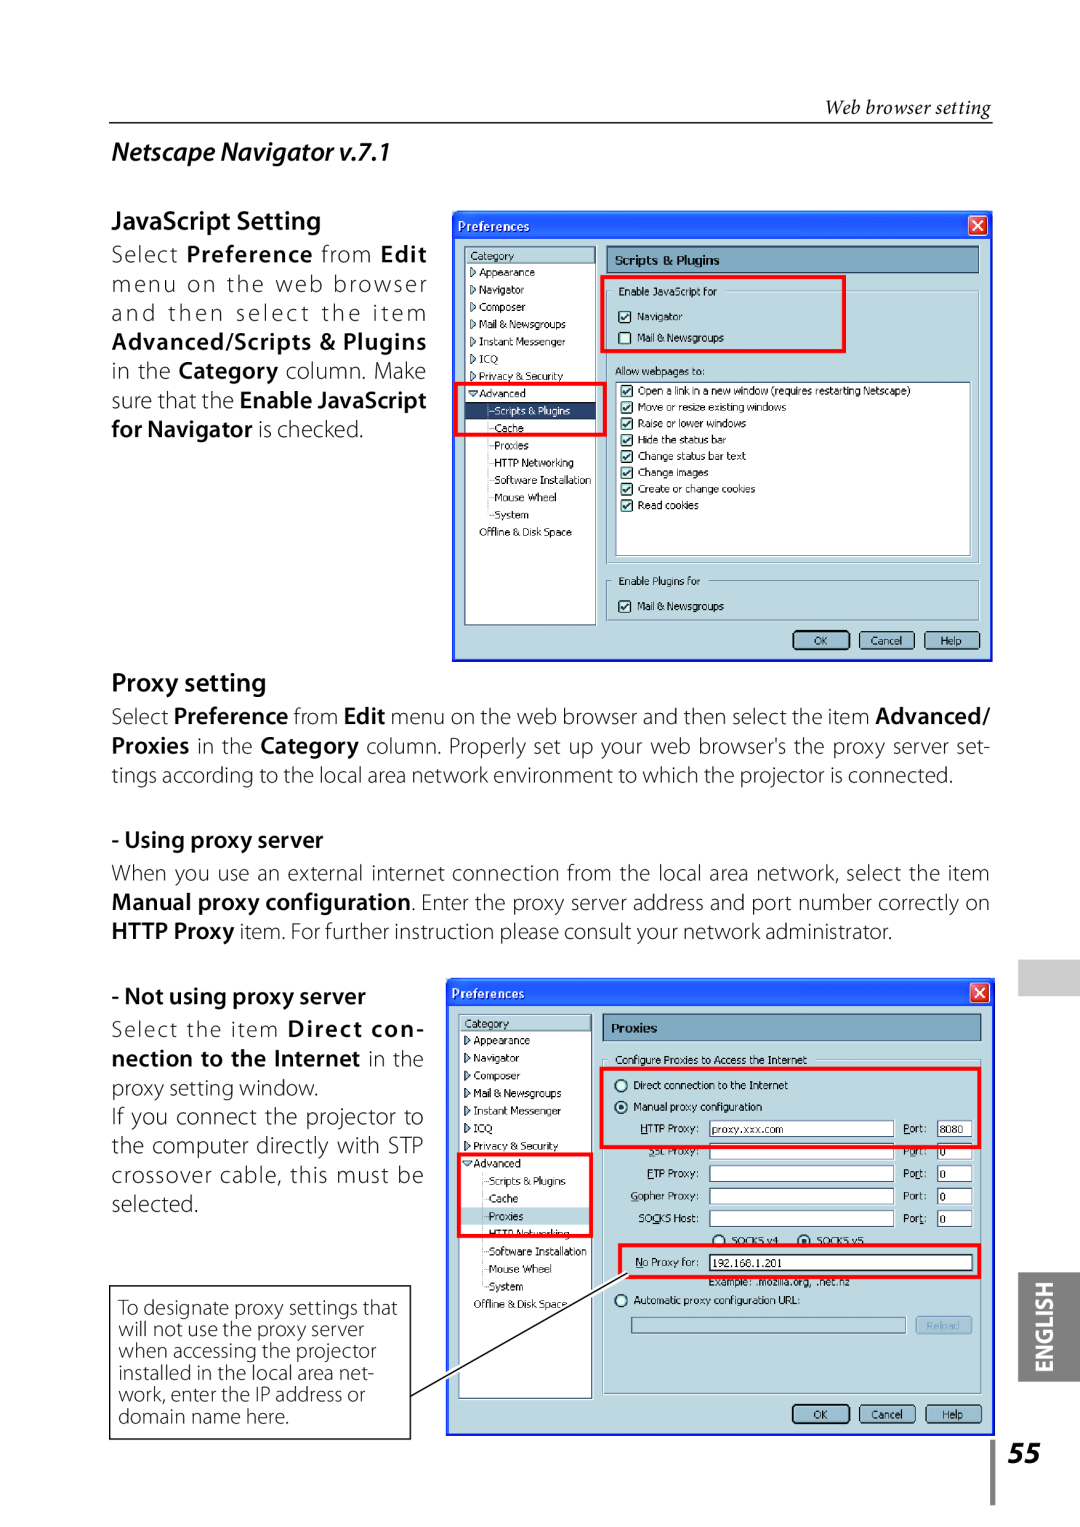 Sanyo Proj05 Netscape Navigator, JavaScript Setting, Proxy setting, Using proxy server, Not using proxy server, English 